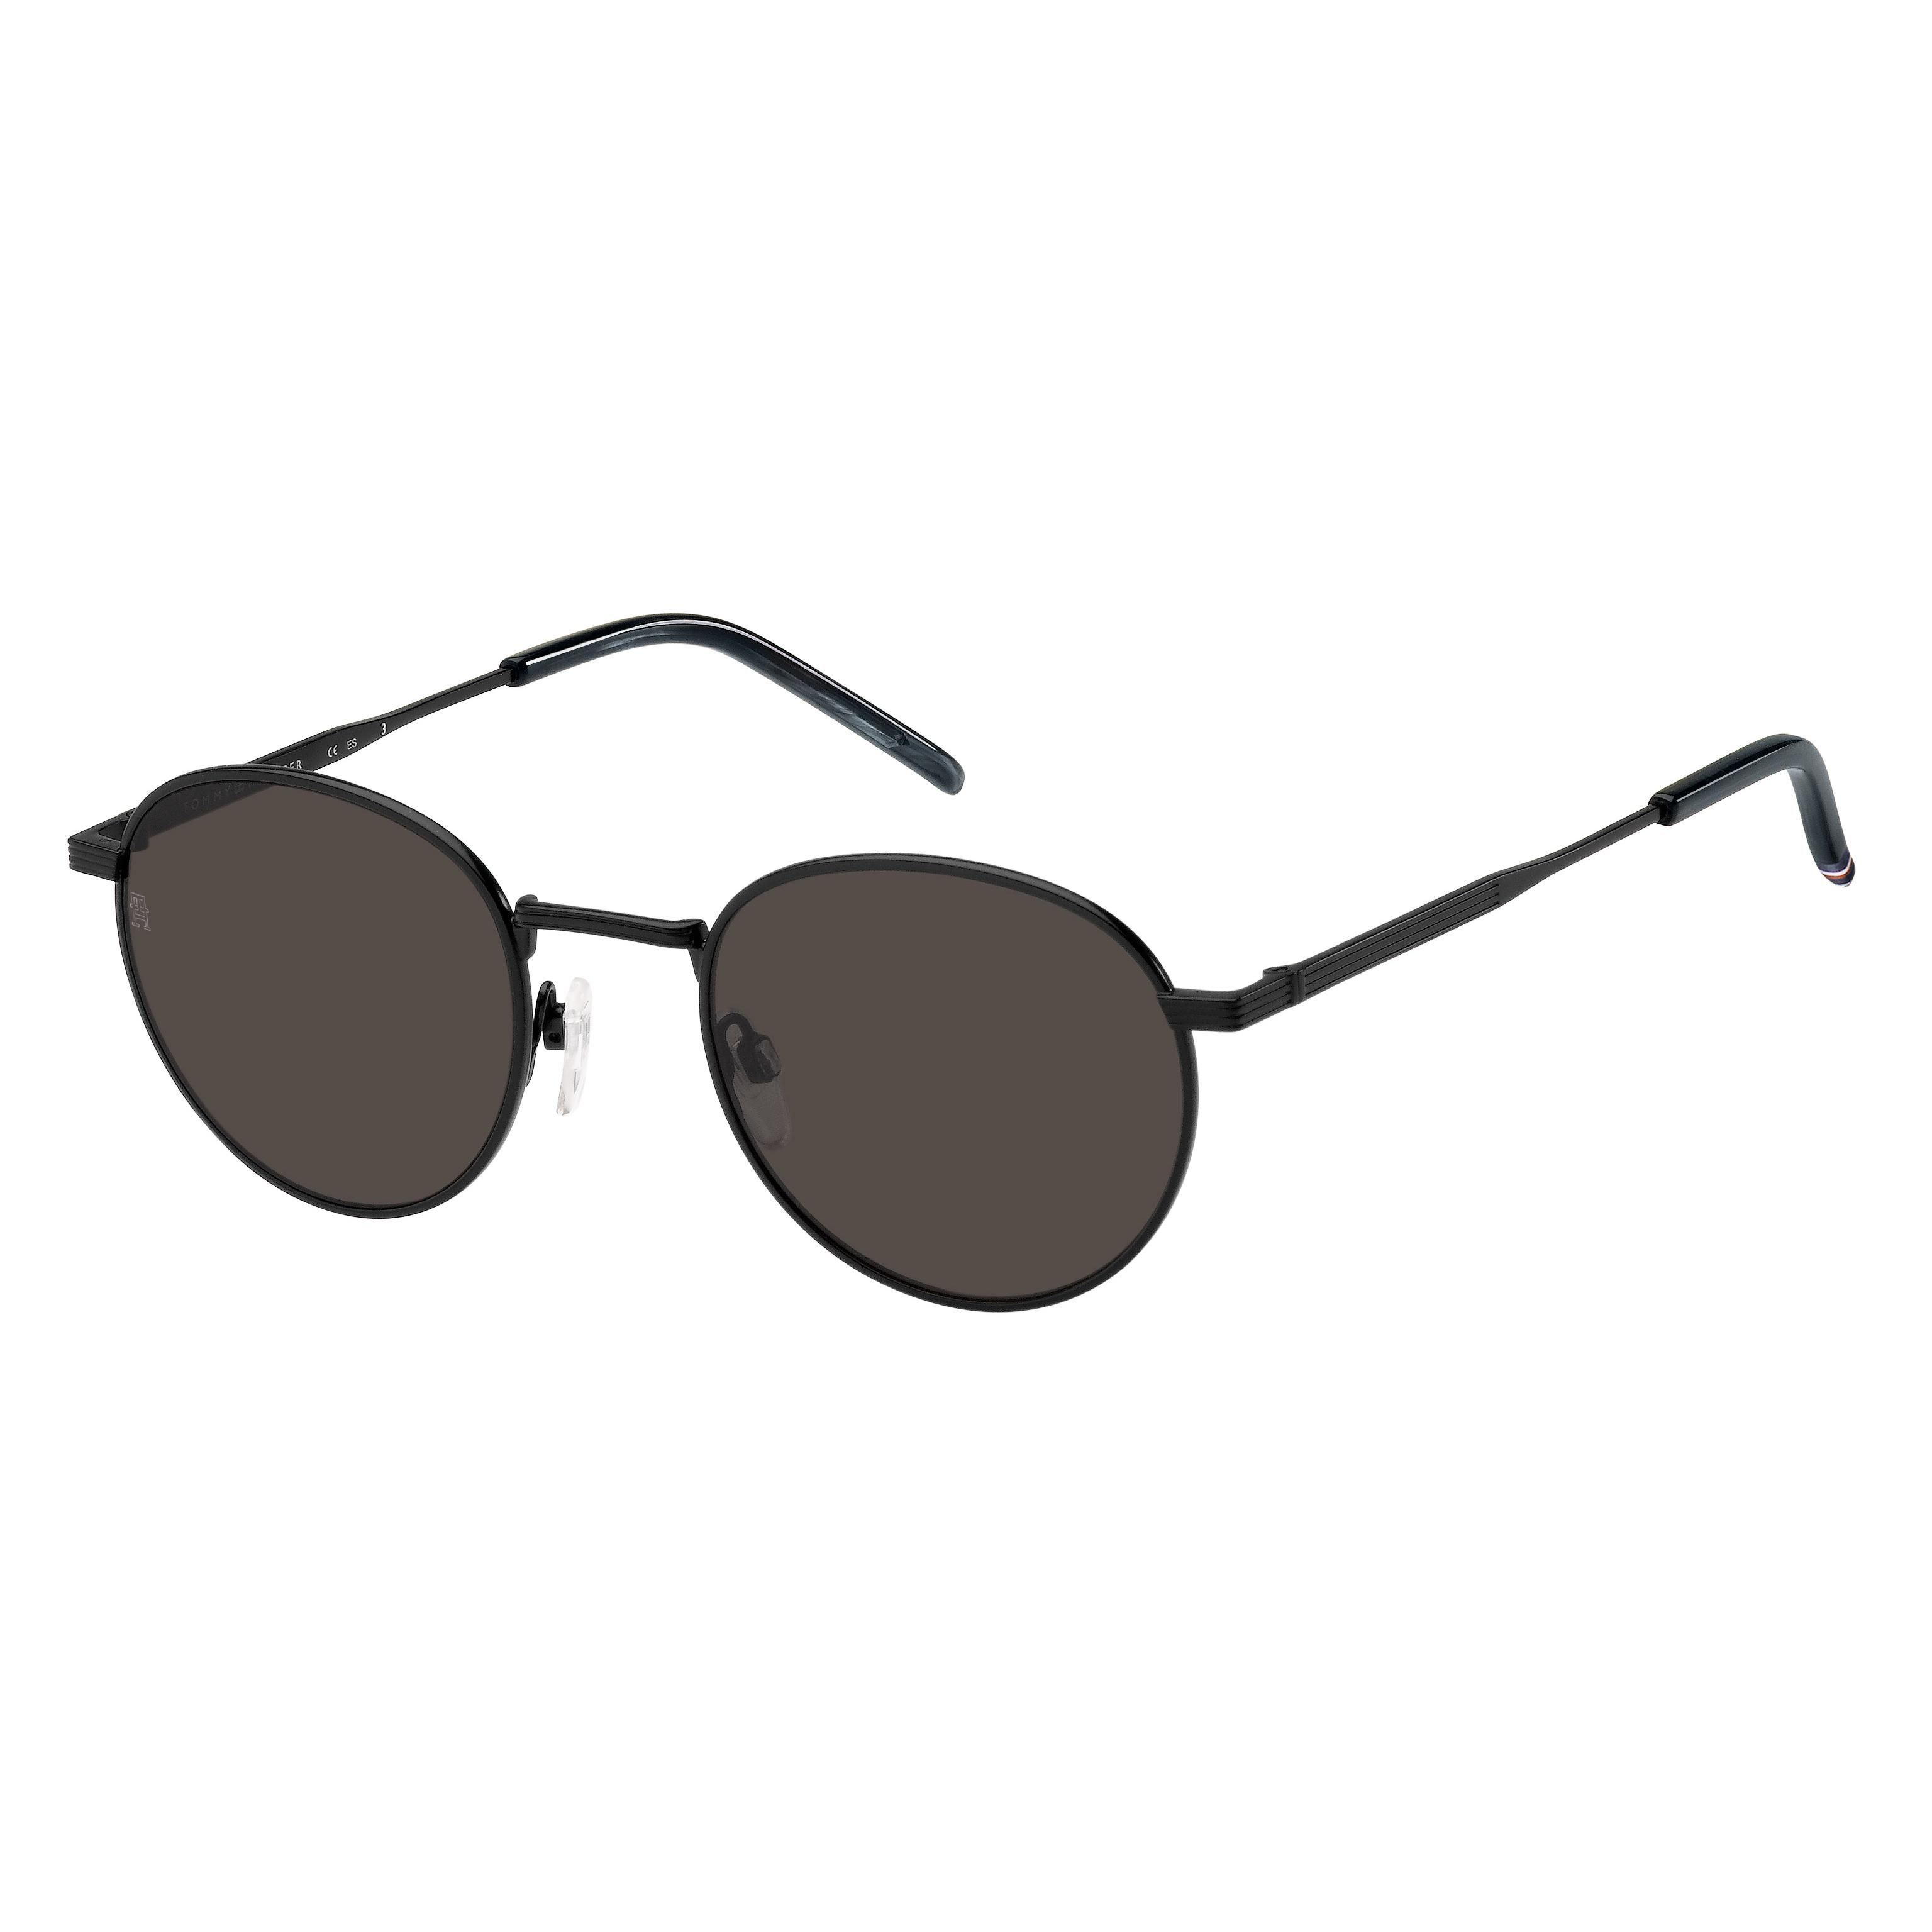 TH 1973 S Round Sunglasses 003 - size 50